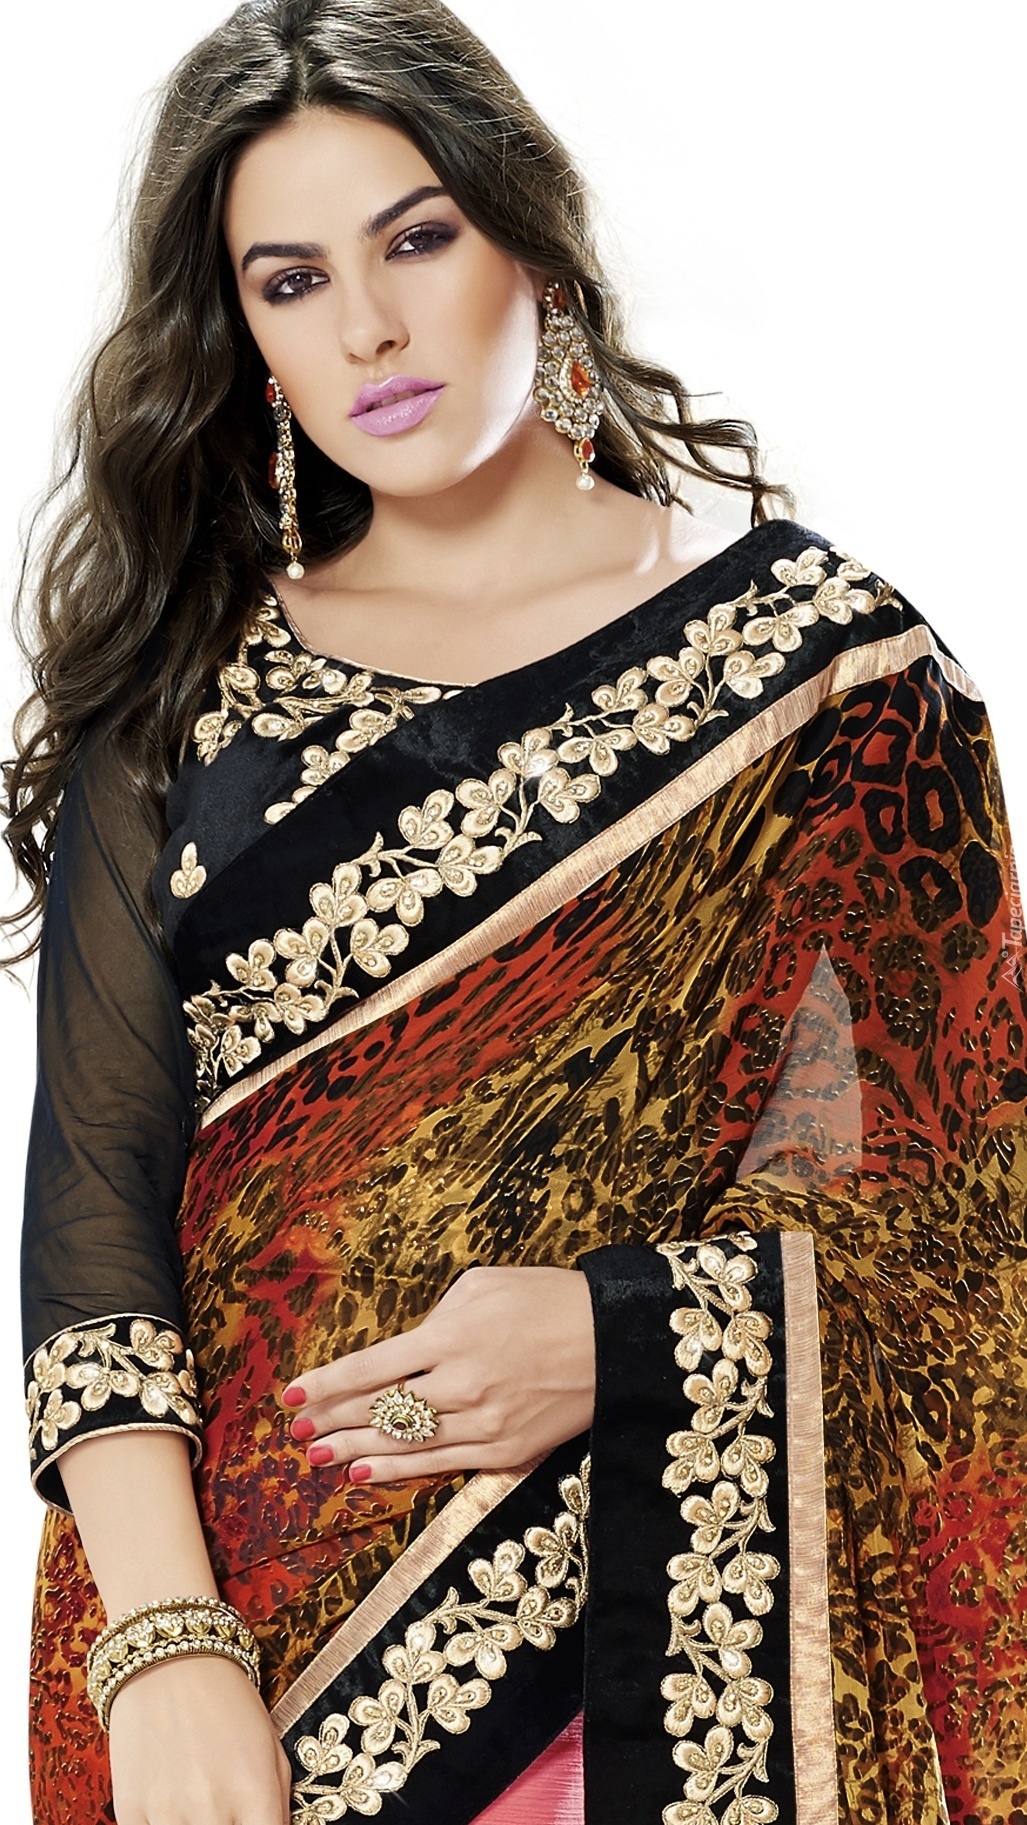 Kobieta w sari